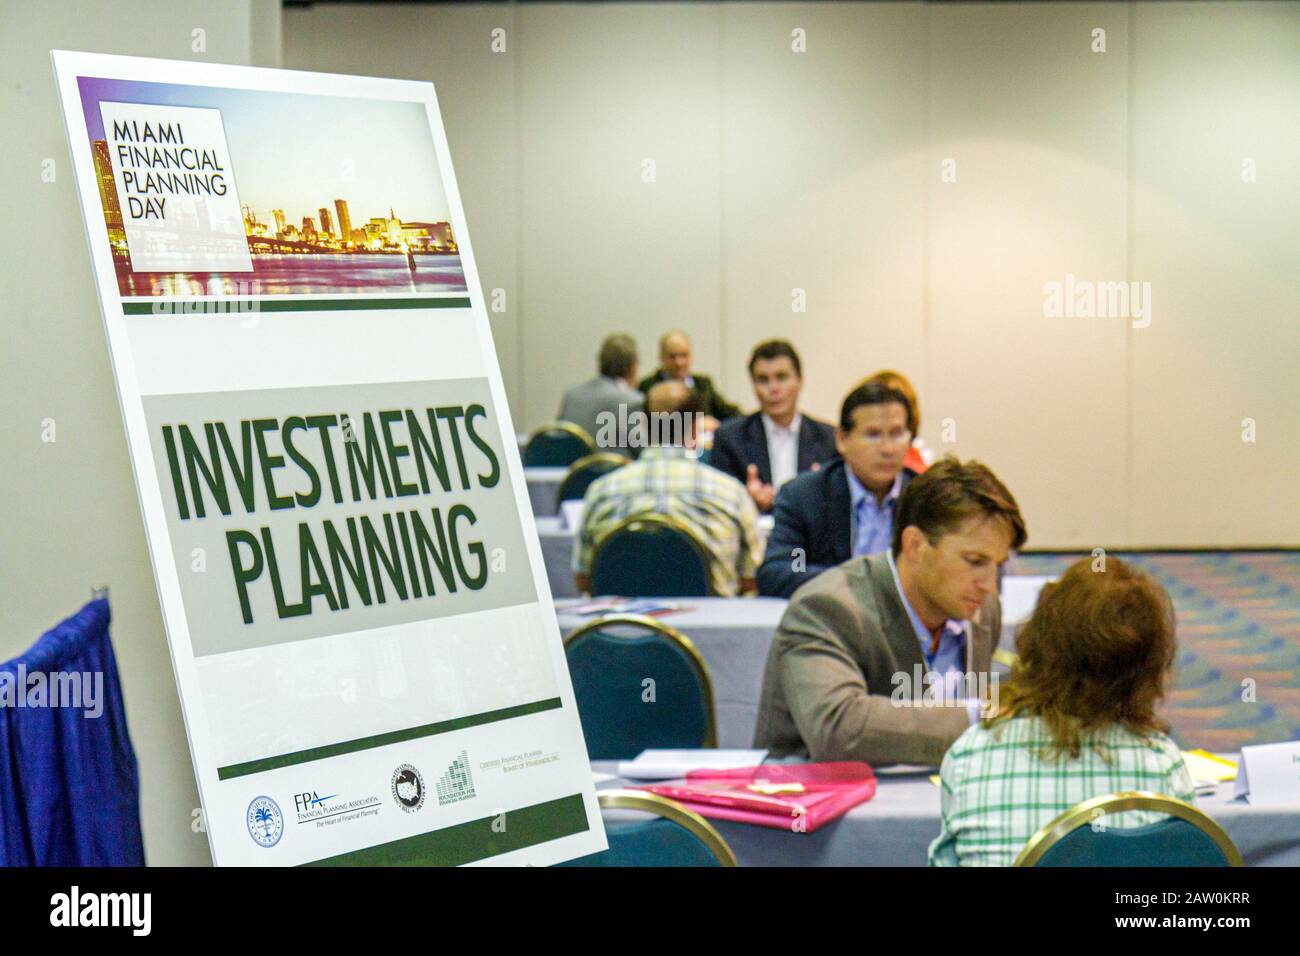 Miami Florida,James L. Knight Convention Center,Miami Financial Planning Day,conseils gratuits,planificateurs guidanceal,signer,planification d'investissement,FL101002045 Banque D'Images